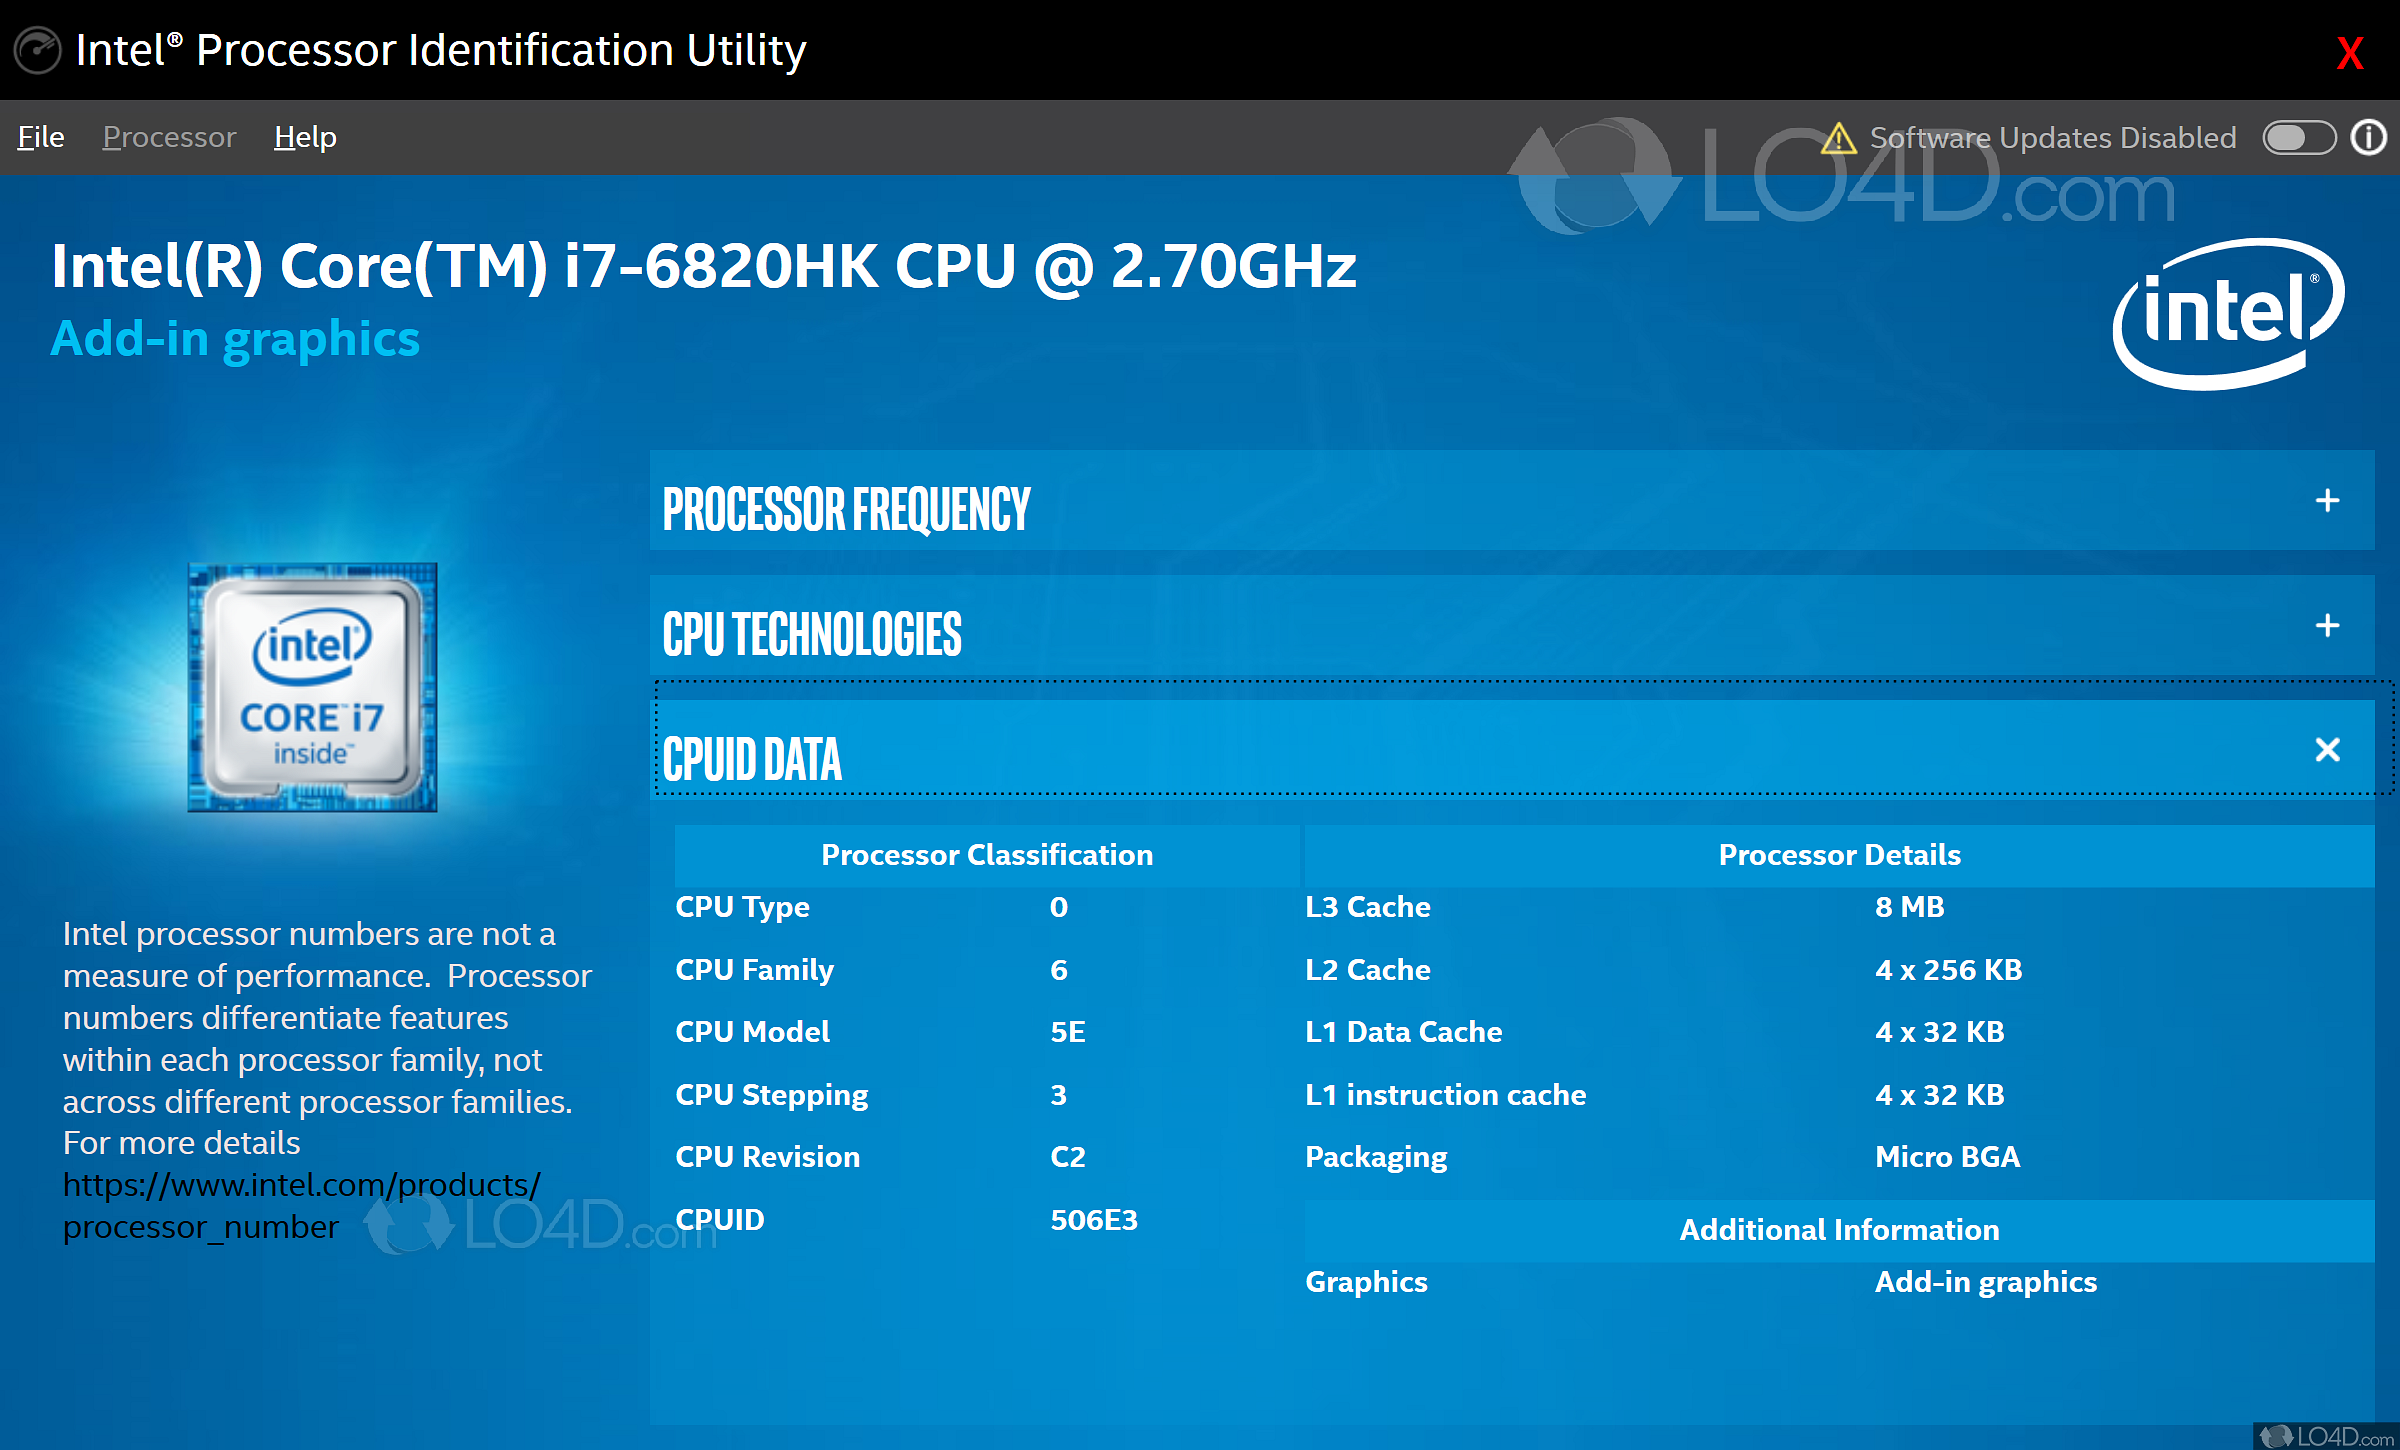 hp processor identification utility